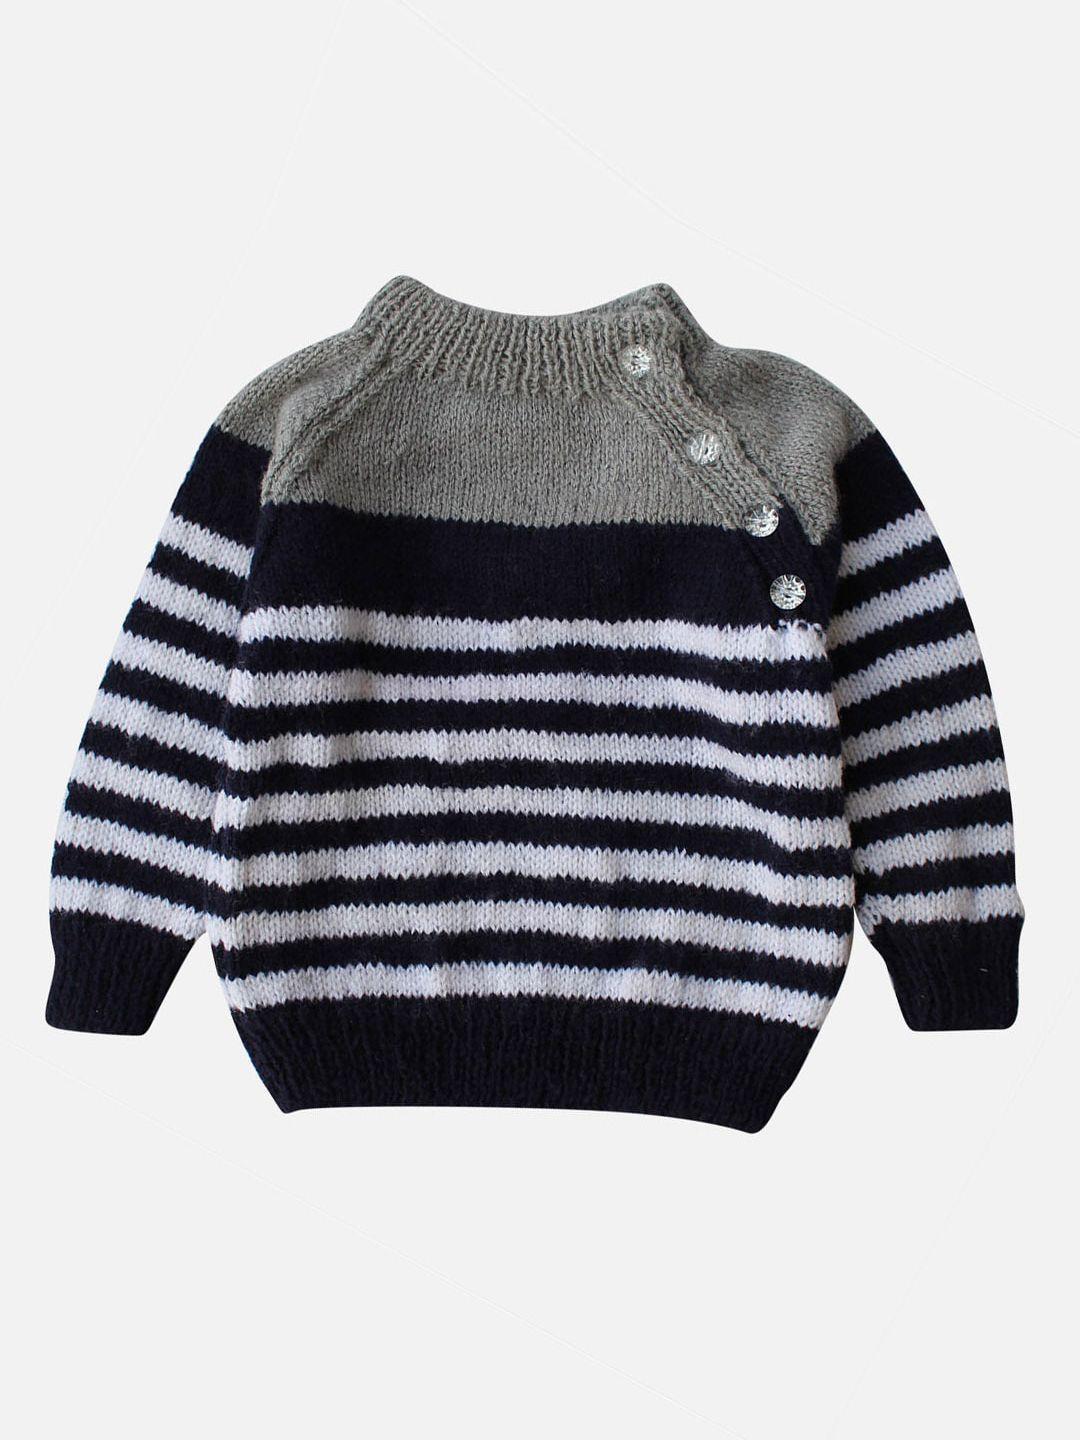 woonie kids black & white striped handmade pullover sweater